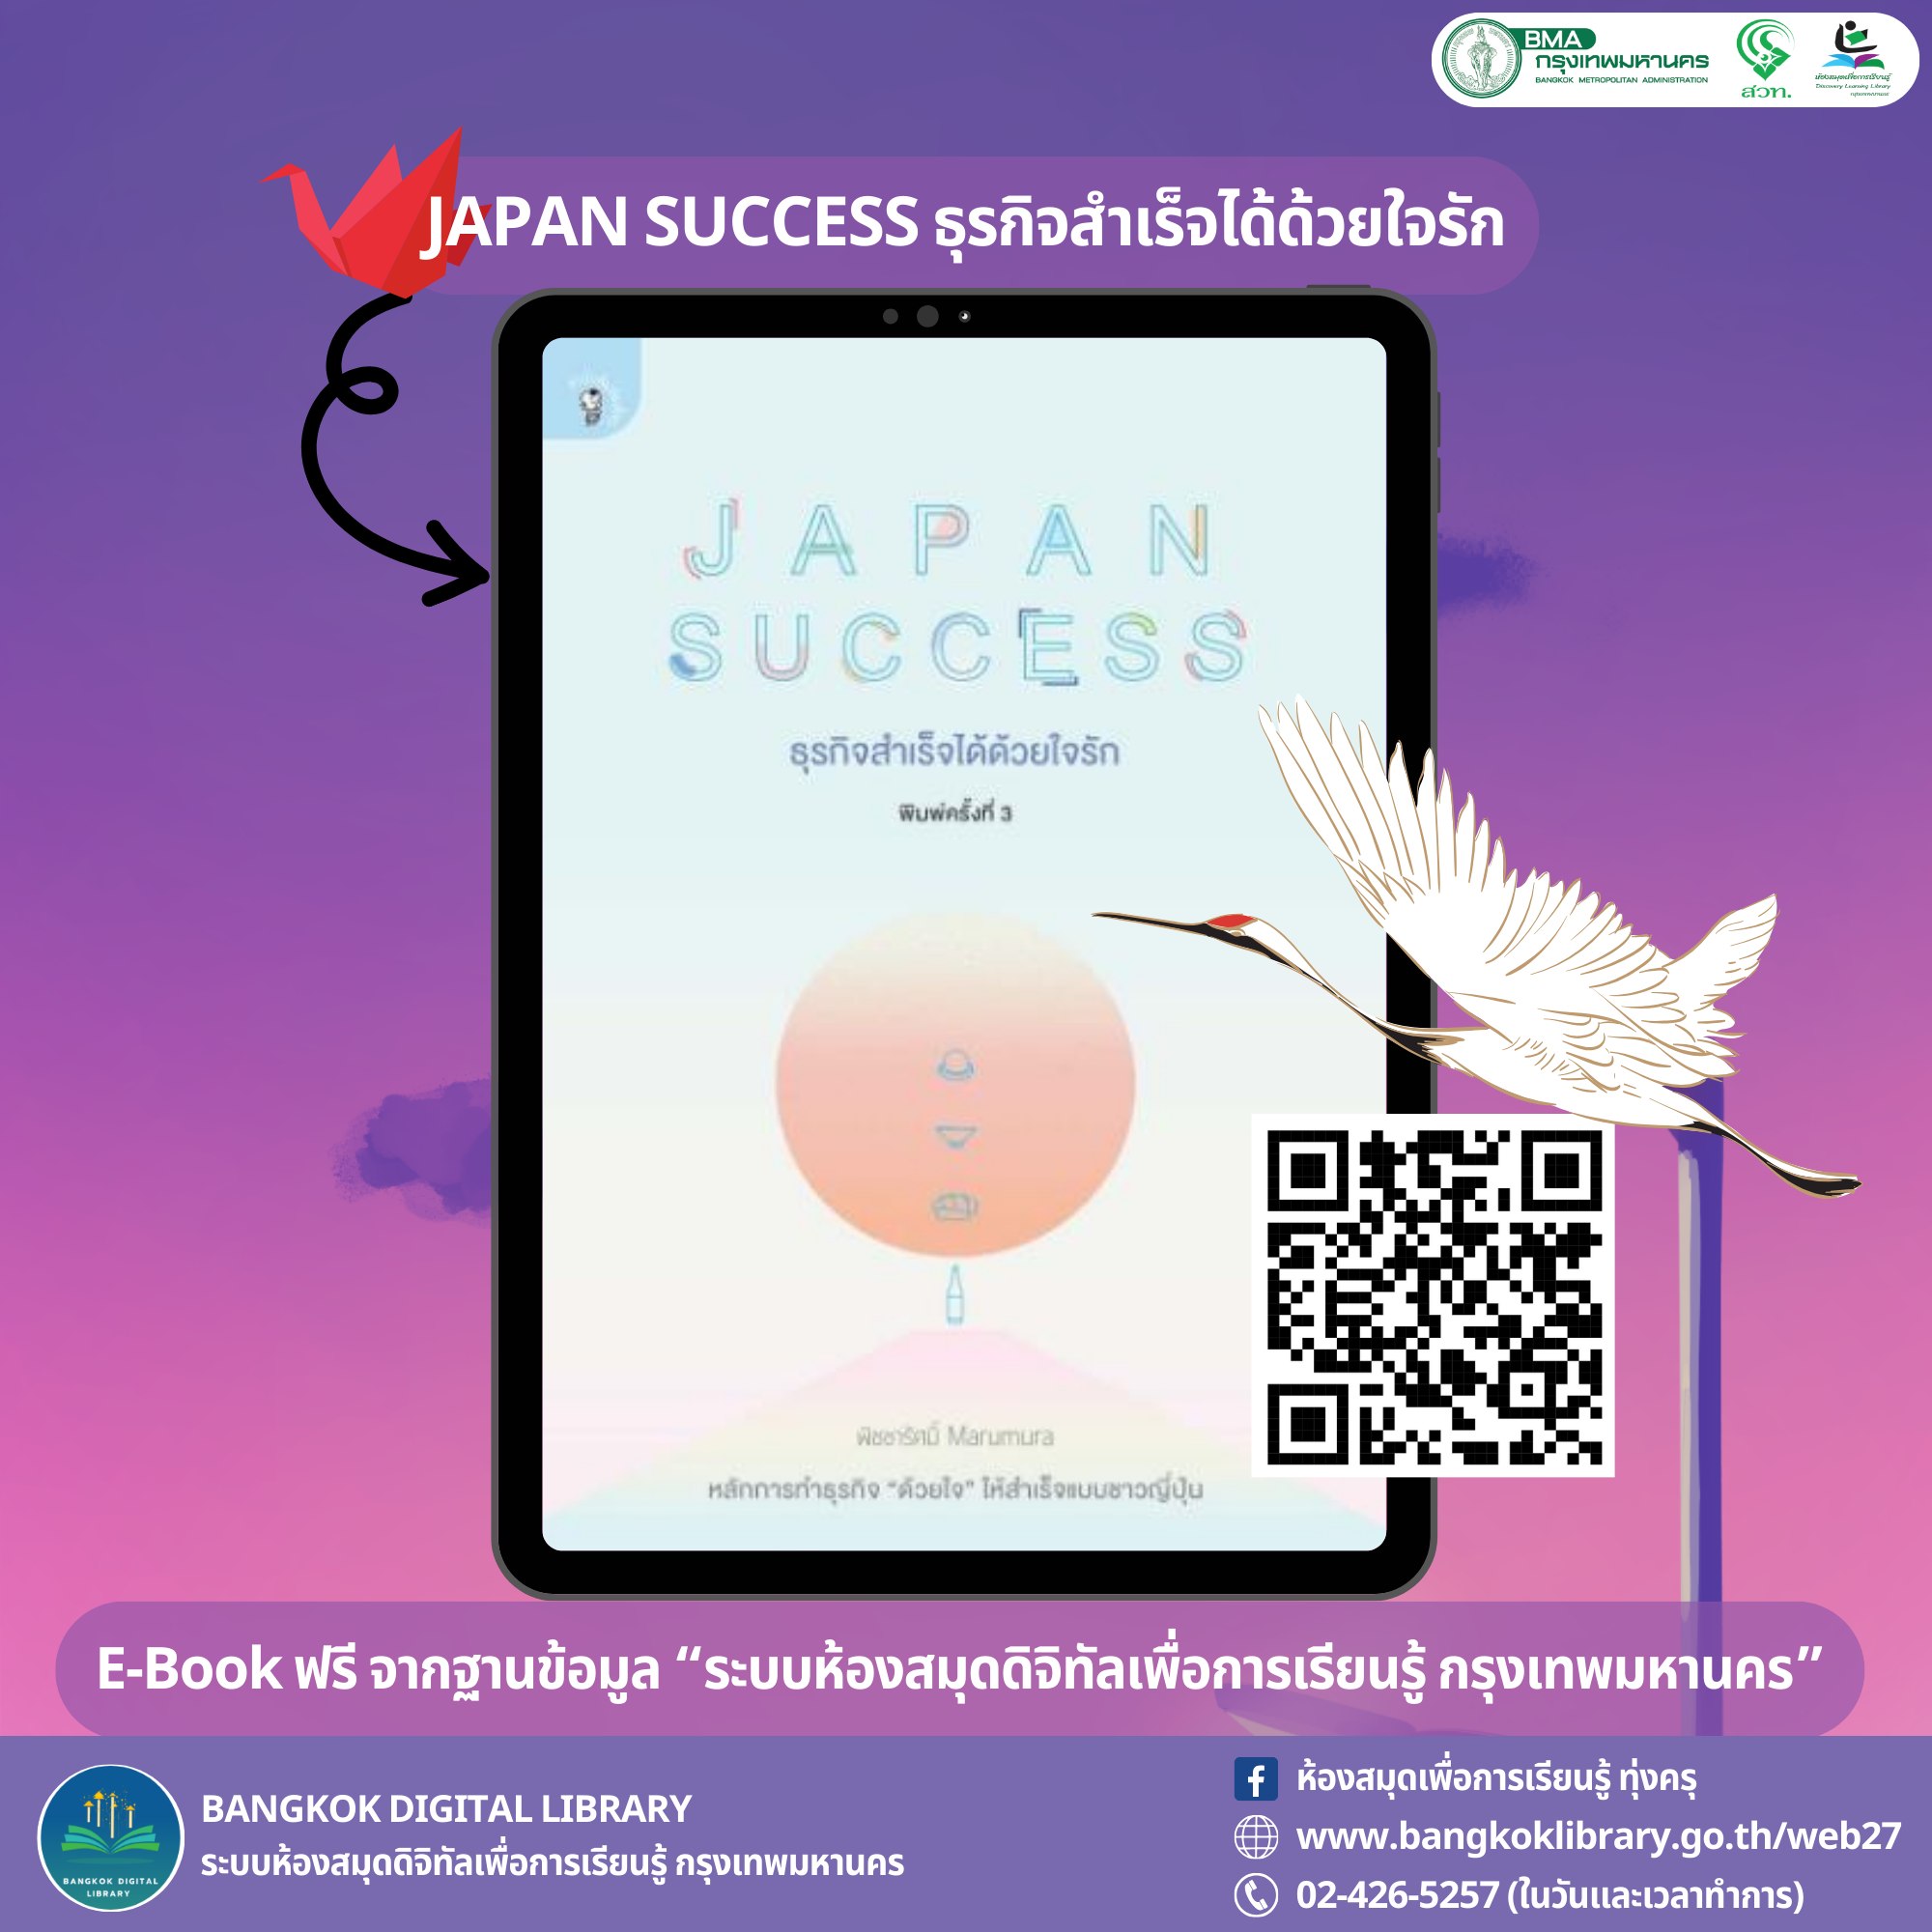 E-Book BKK : JAPAN SUCCESS ธุรกิจสำเร็จได้ด้วยใจรัก